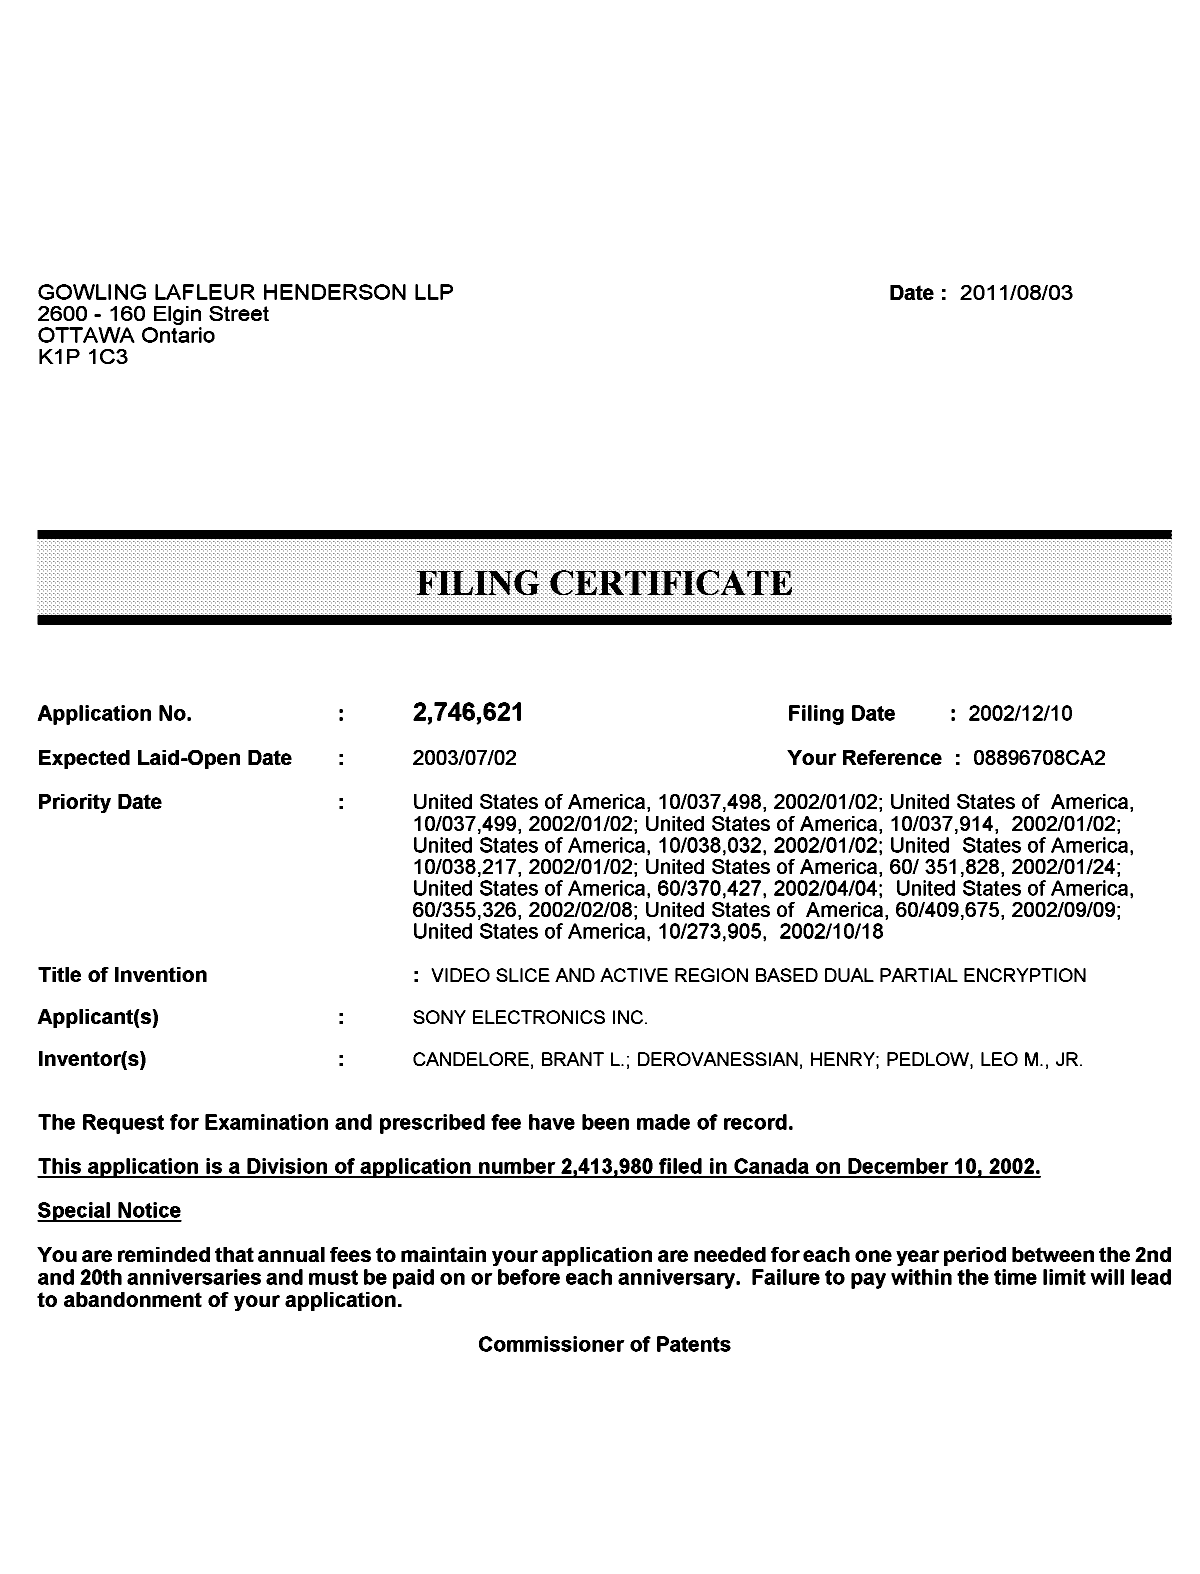 Canadian Patent Document 2746621. Correspondence 20110803. Image 1 of 1